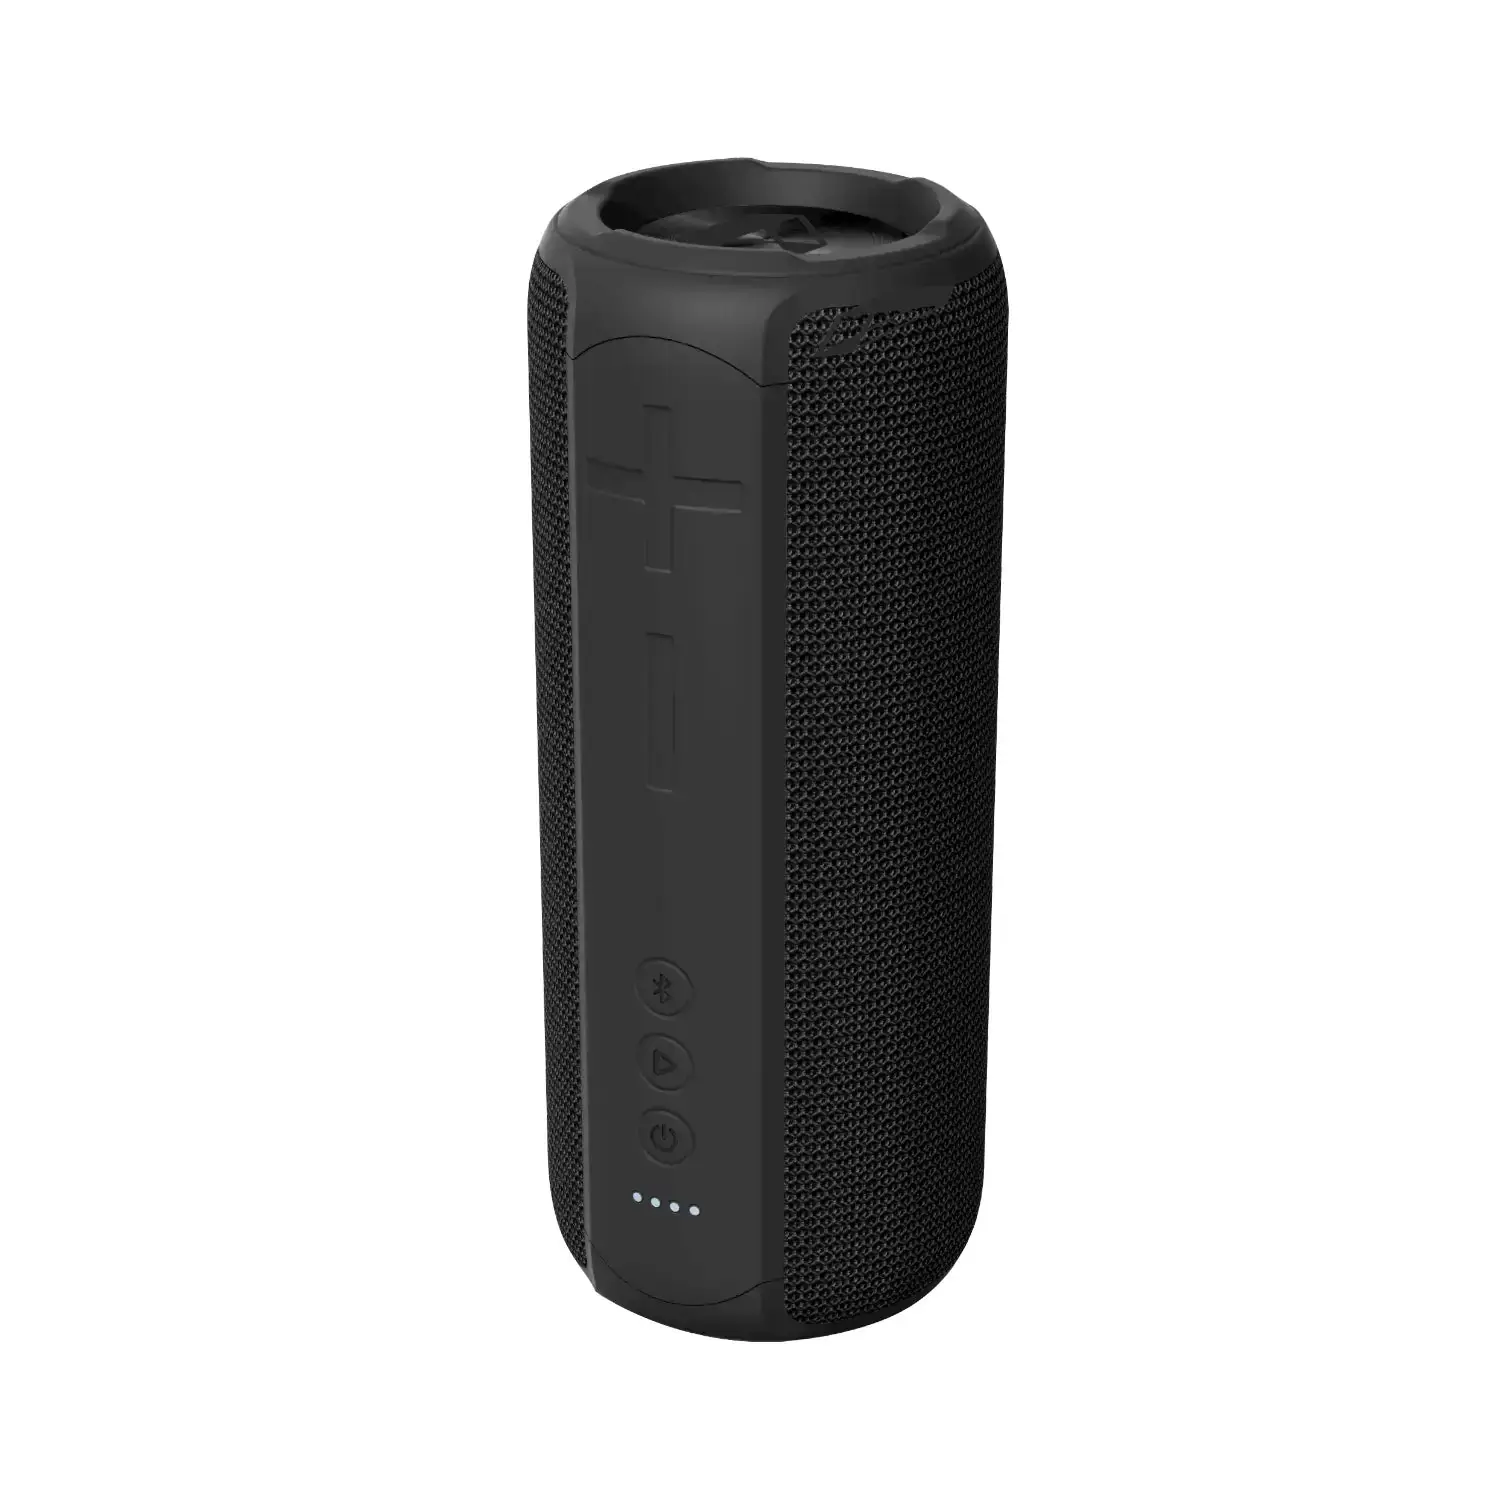 GLOWBEATS Wireless Bluetooth Speaker, Black, Three-quarter Angle View, Standing.